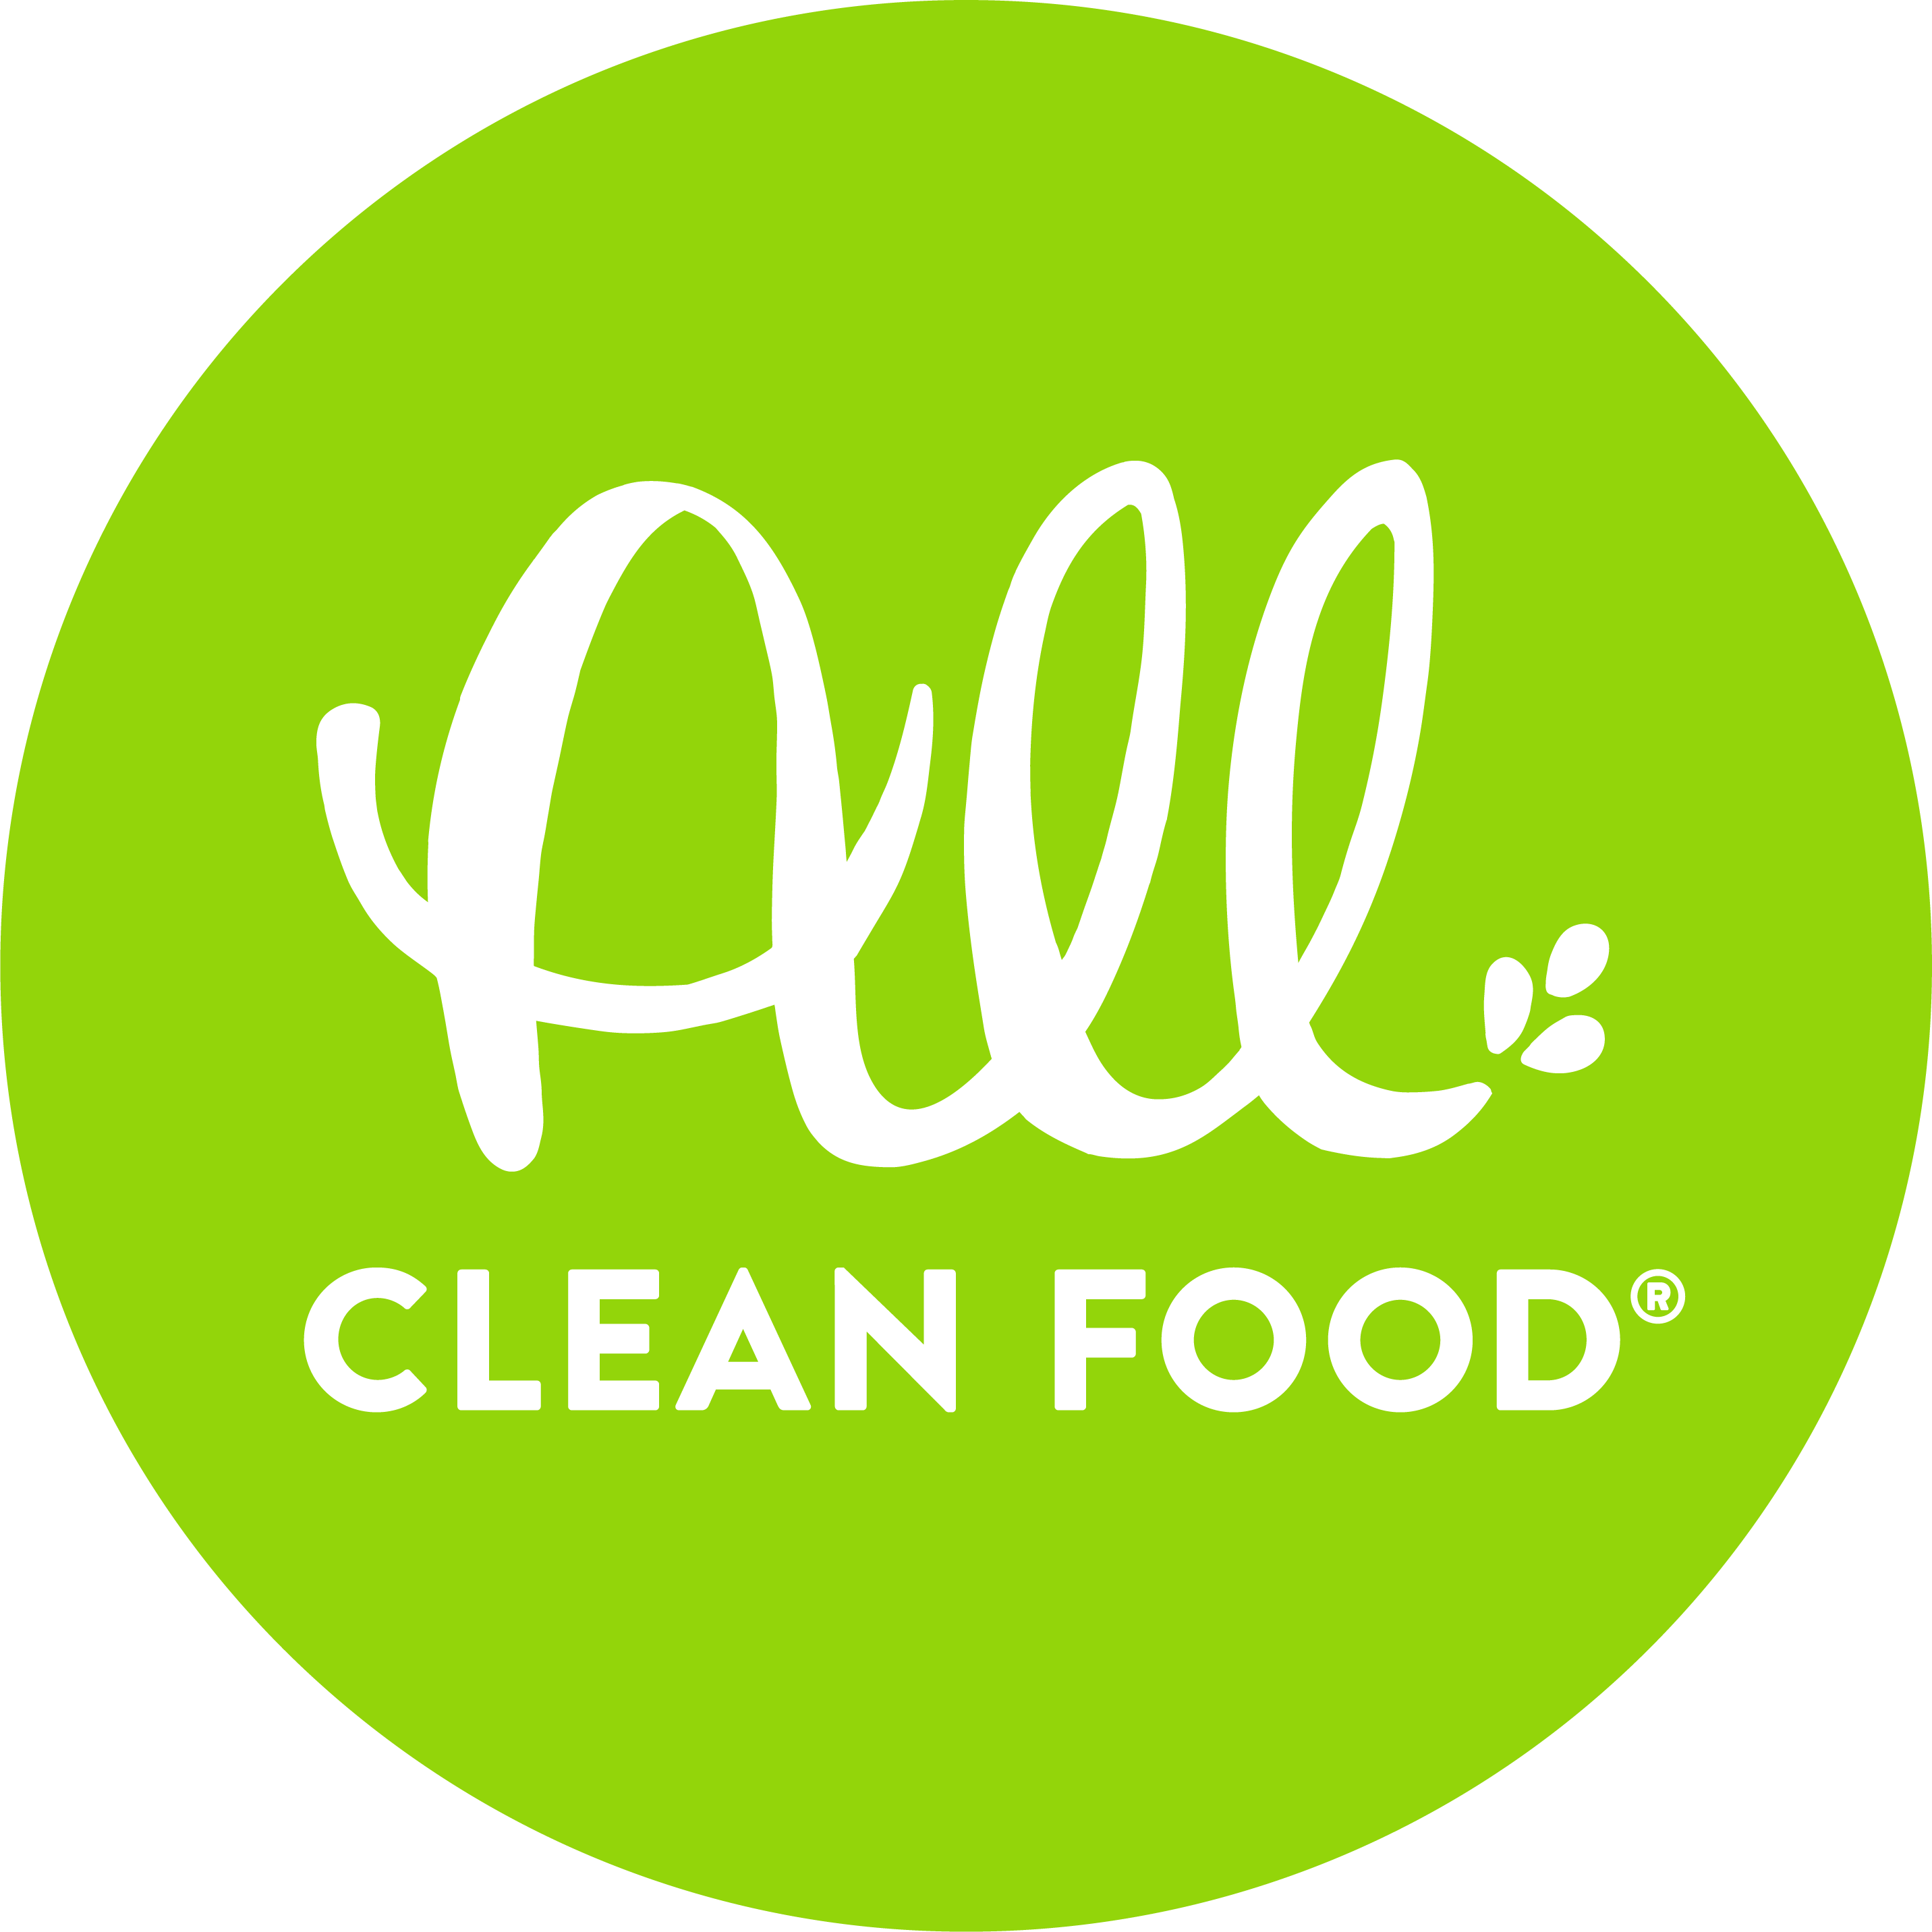 All Clean Food